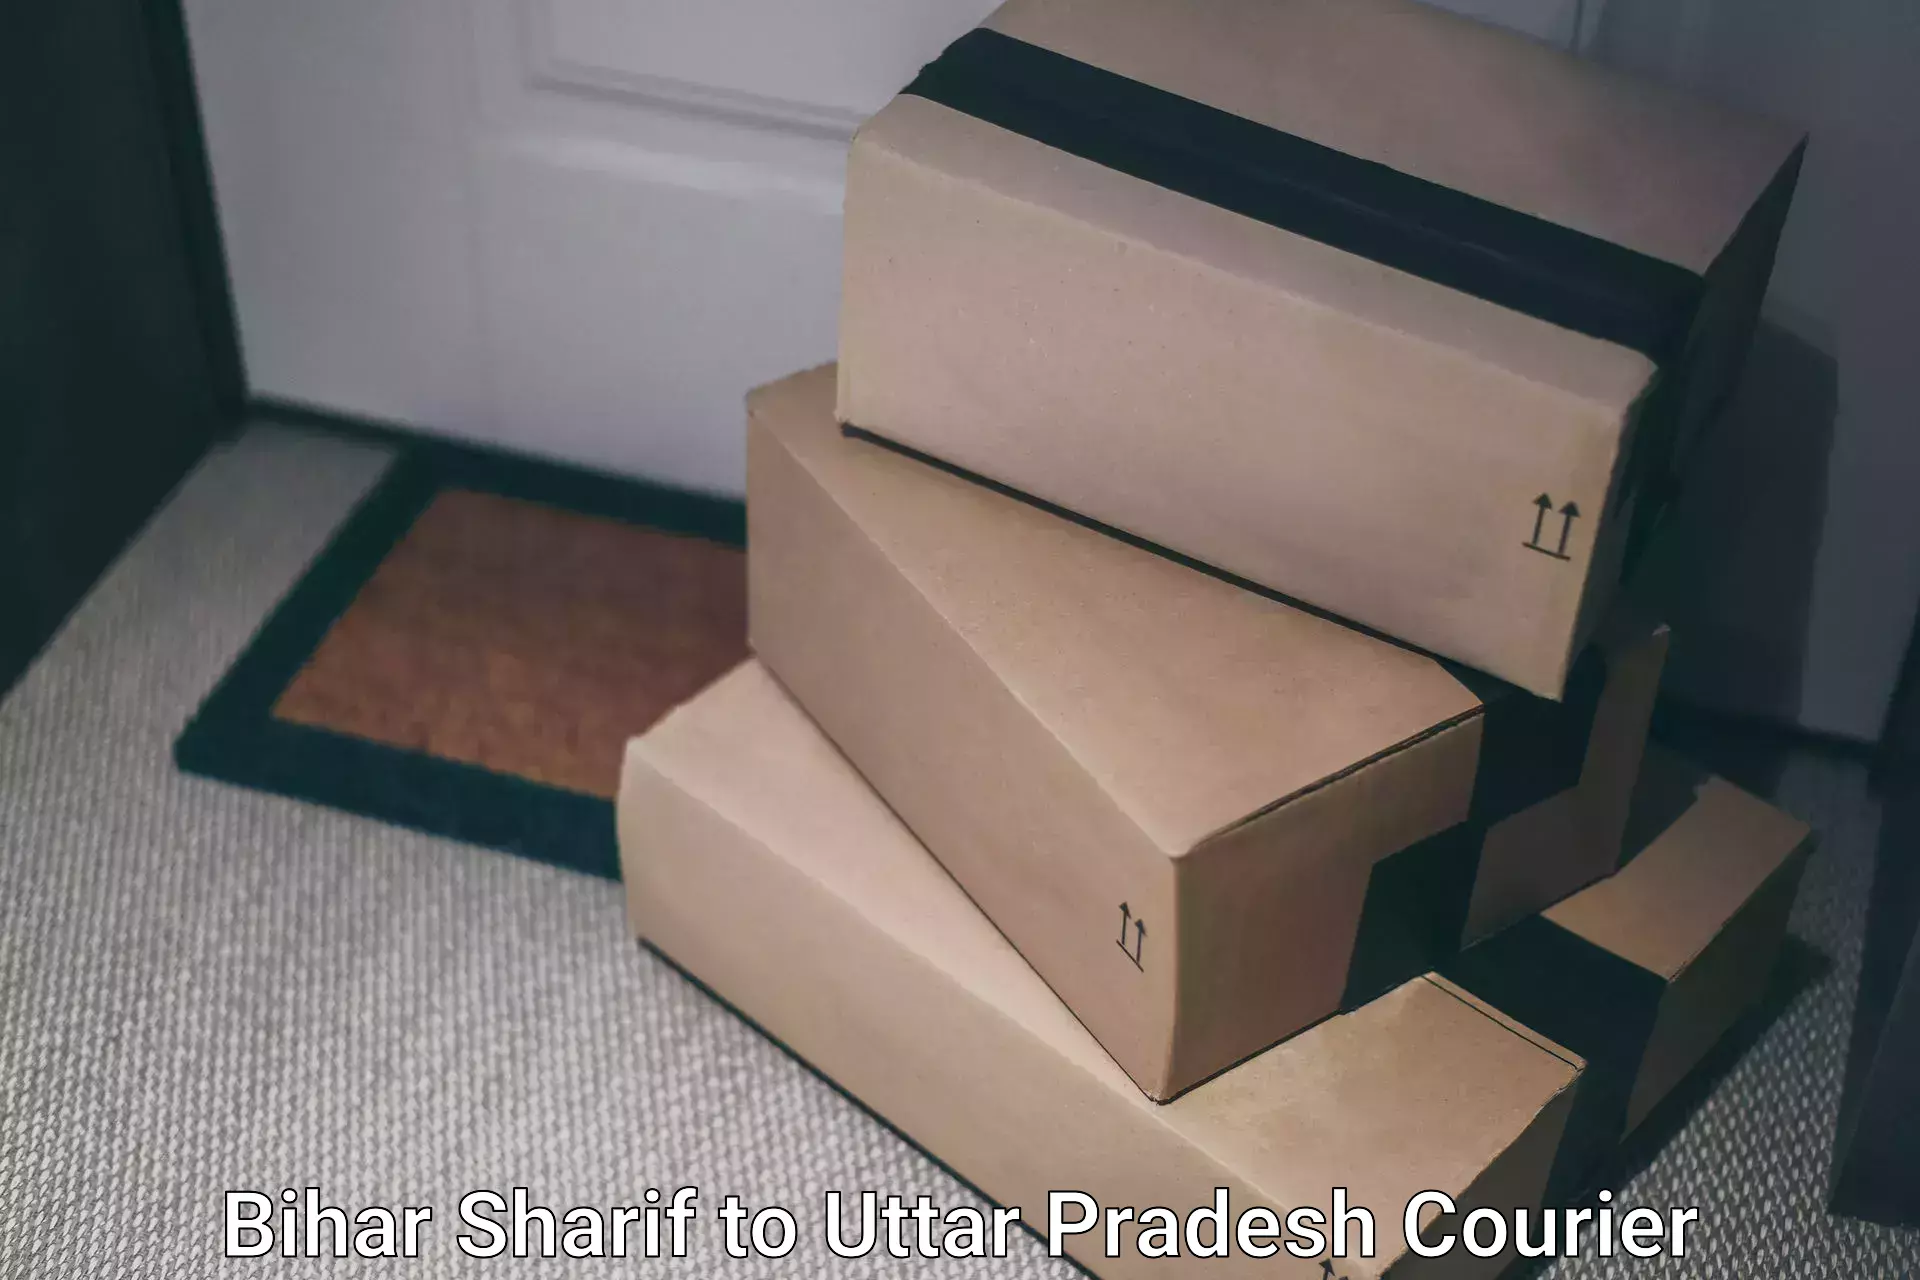 Tech-enabled shipping Bihar Sharif to Saray Ankil